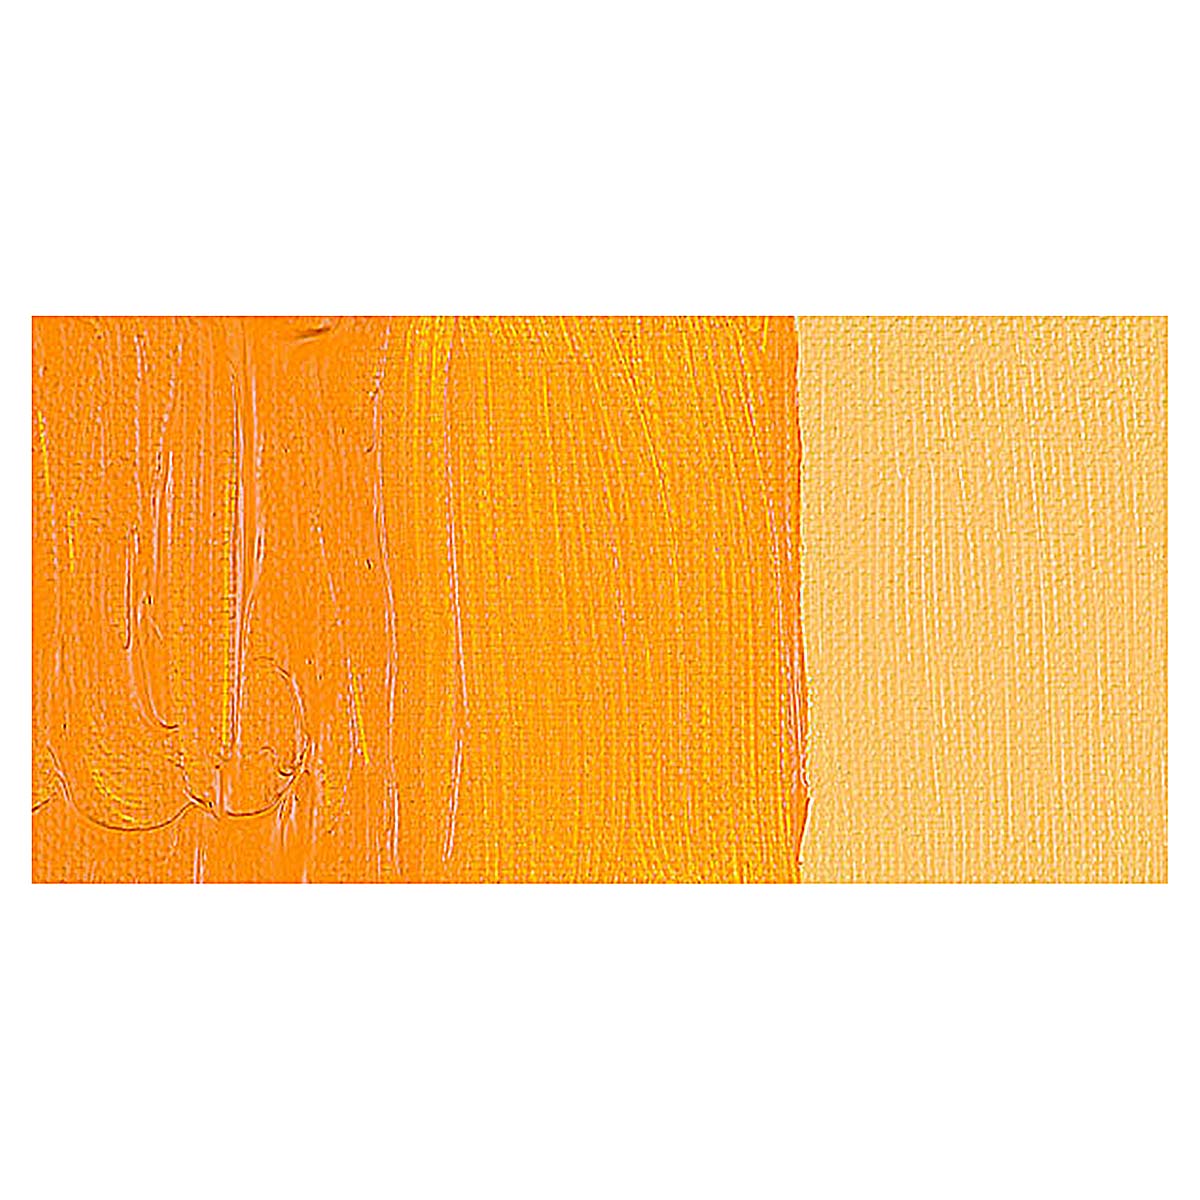 Utrecht Studio Series Acrylic Paint - Medium Orange, Pint